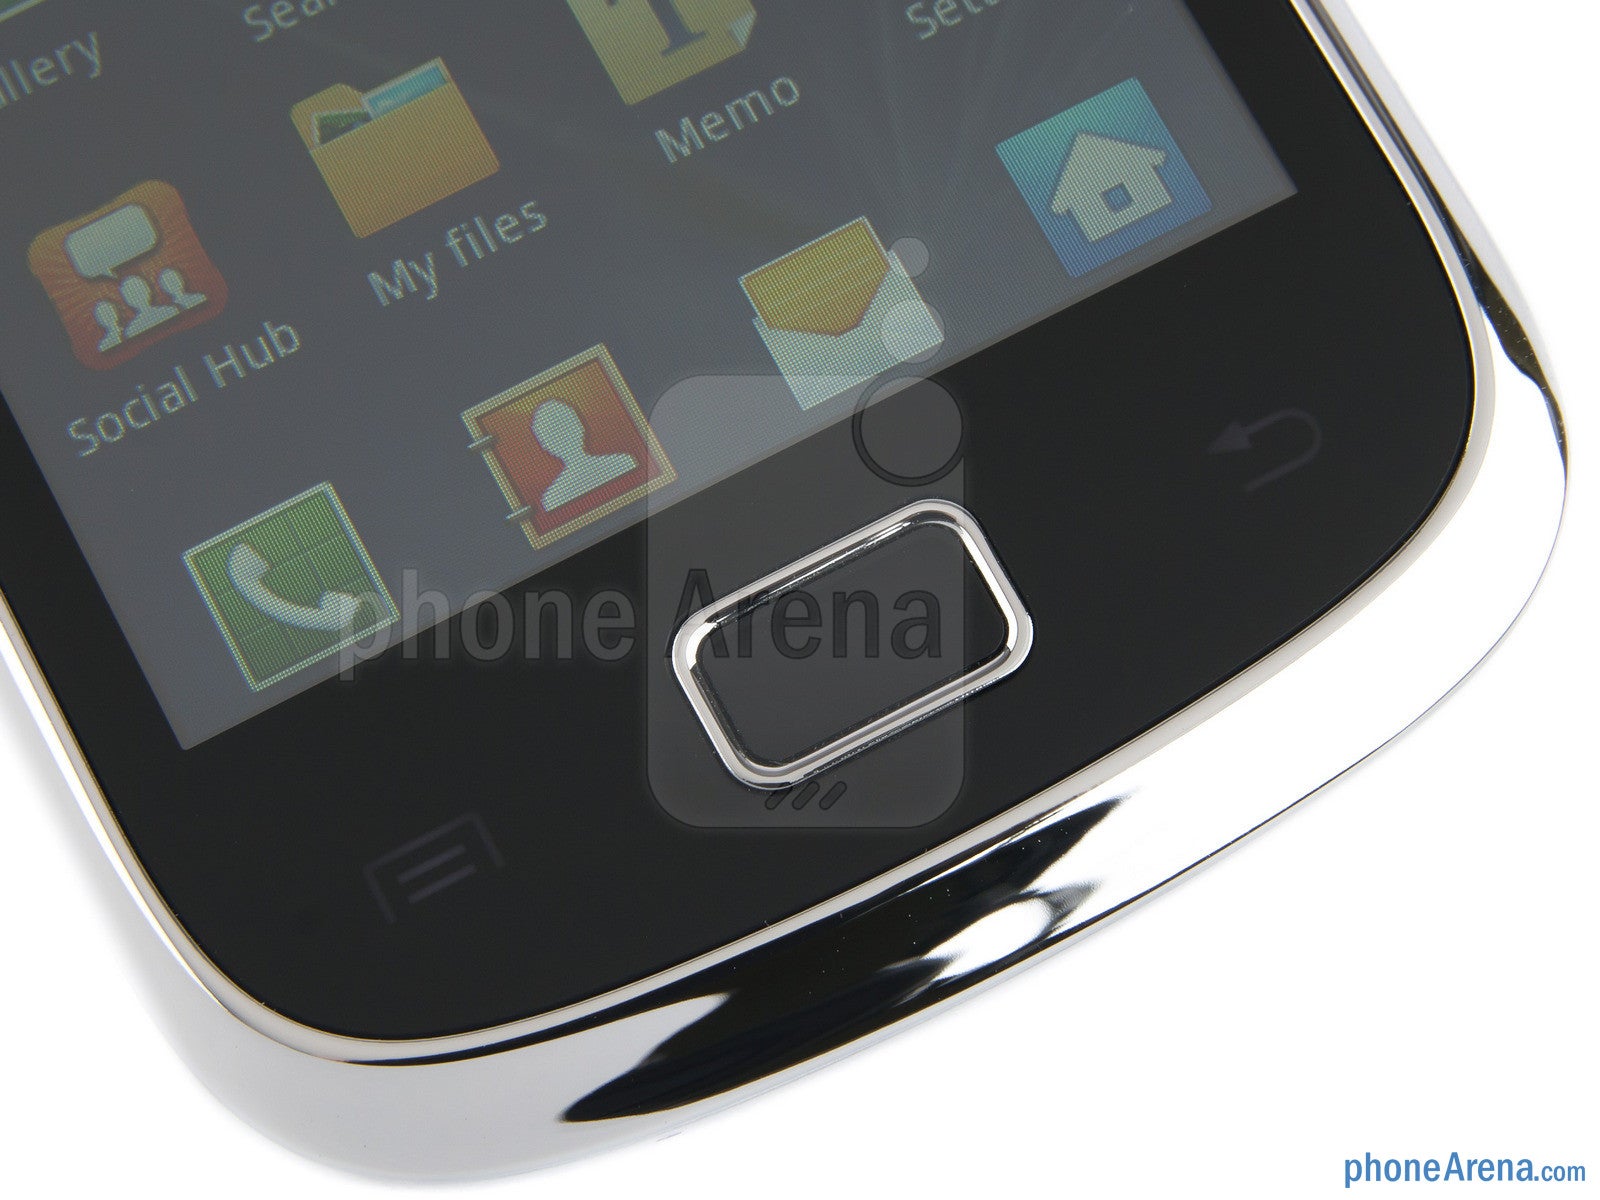 Samsung Galaxy mini 2 Preview